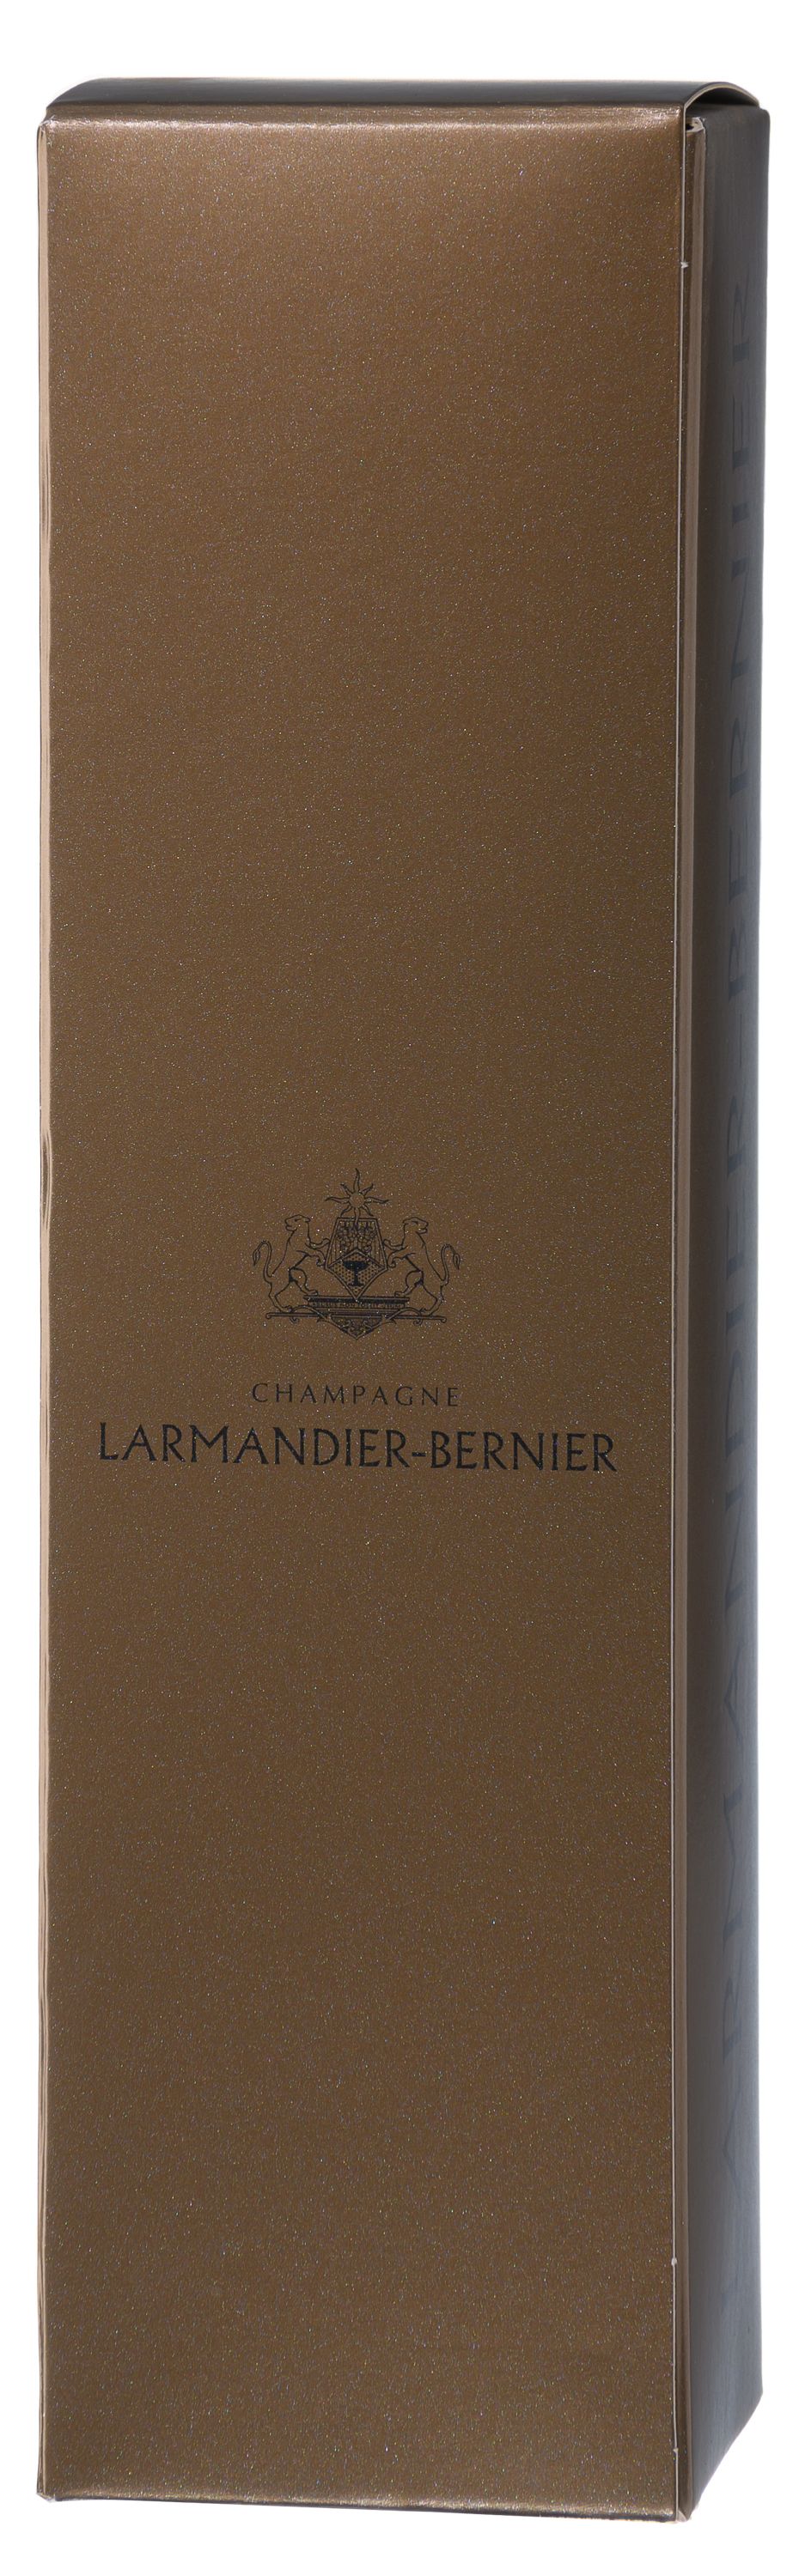 Коробка подарочная картонная для бутылок «Шампань Лармандье-Бернье»